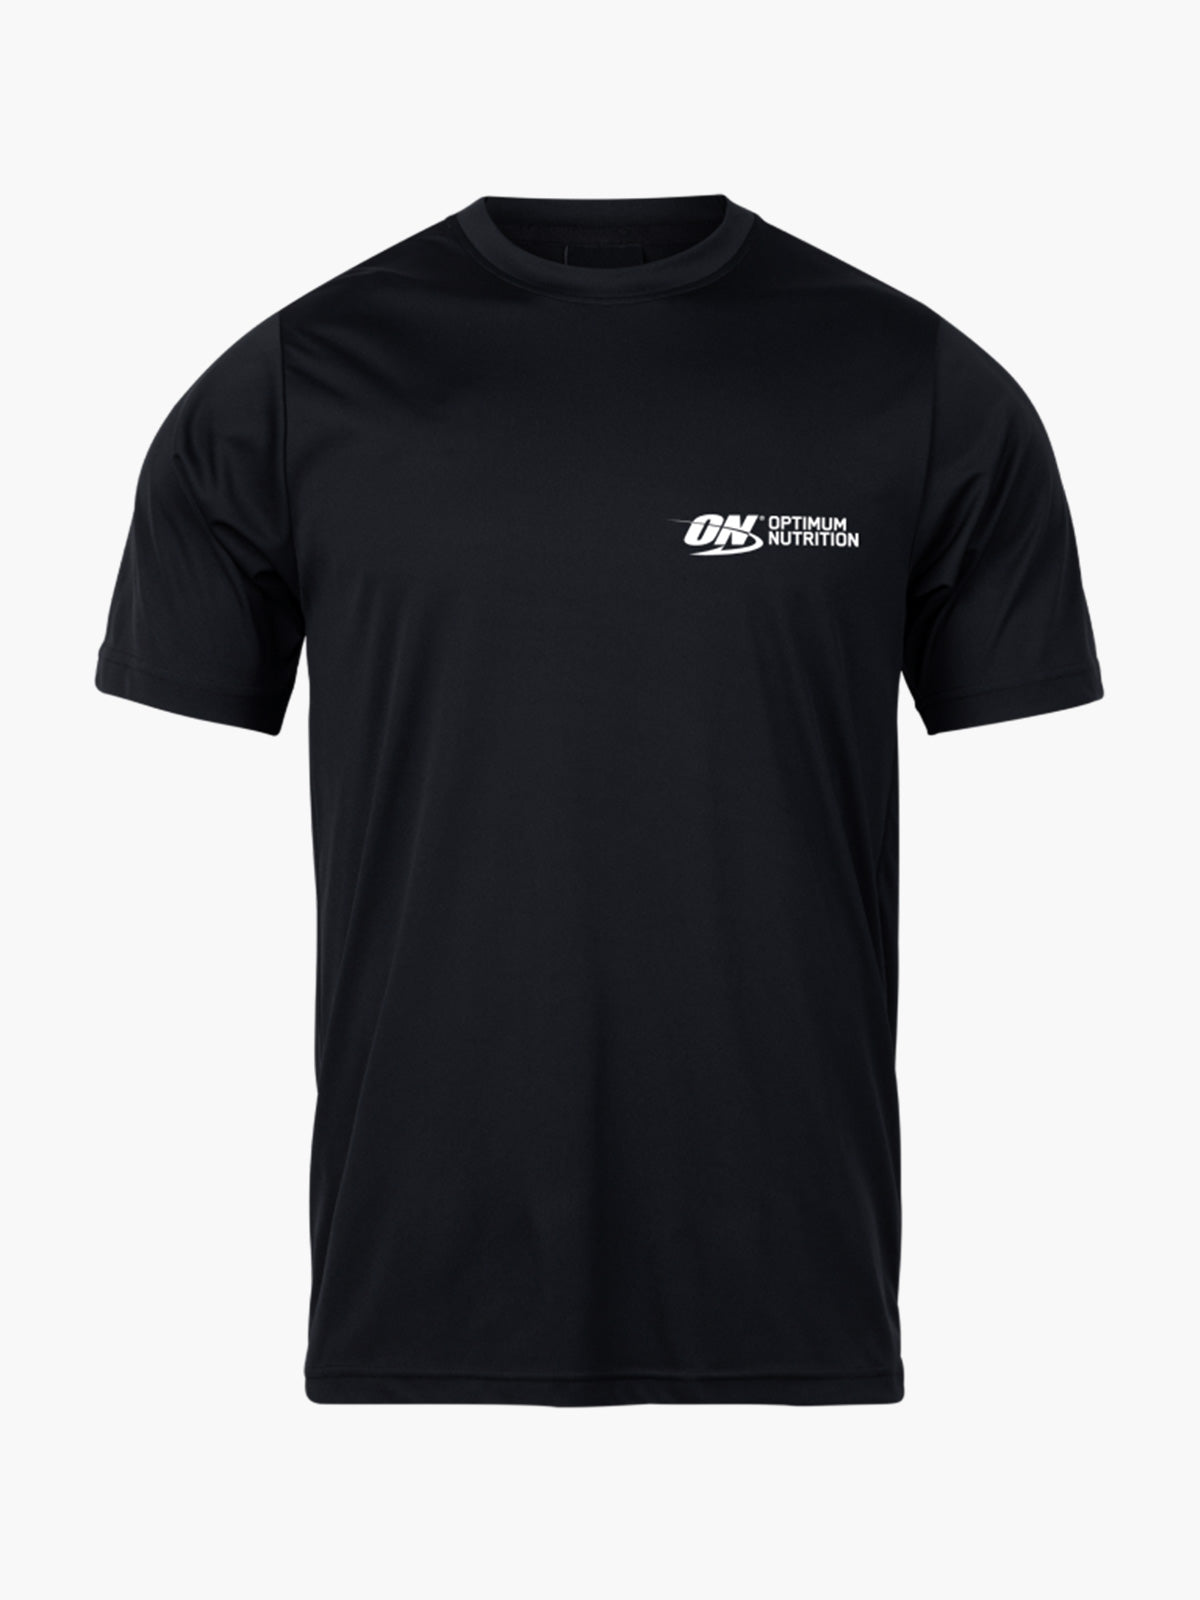 ON Men's Black Performance T-shirt - Free Gift